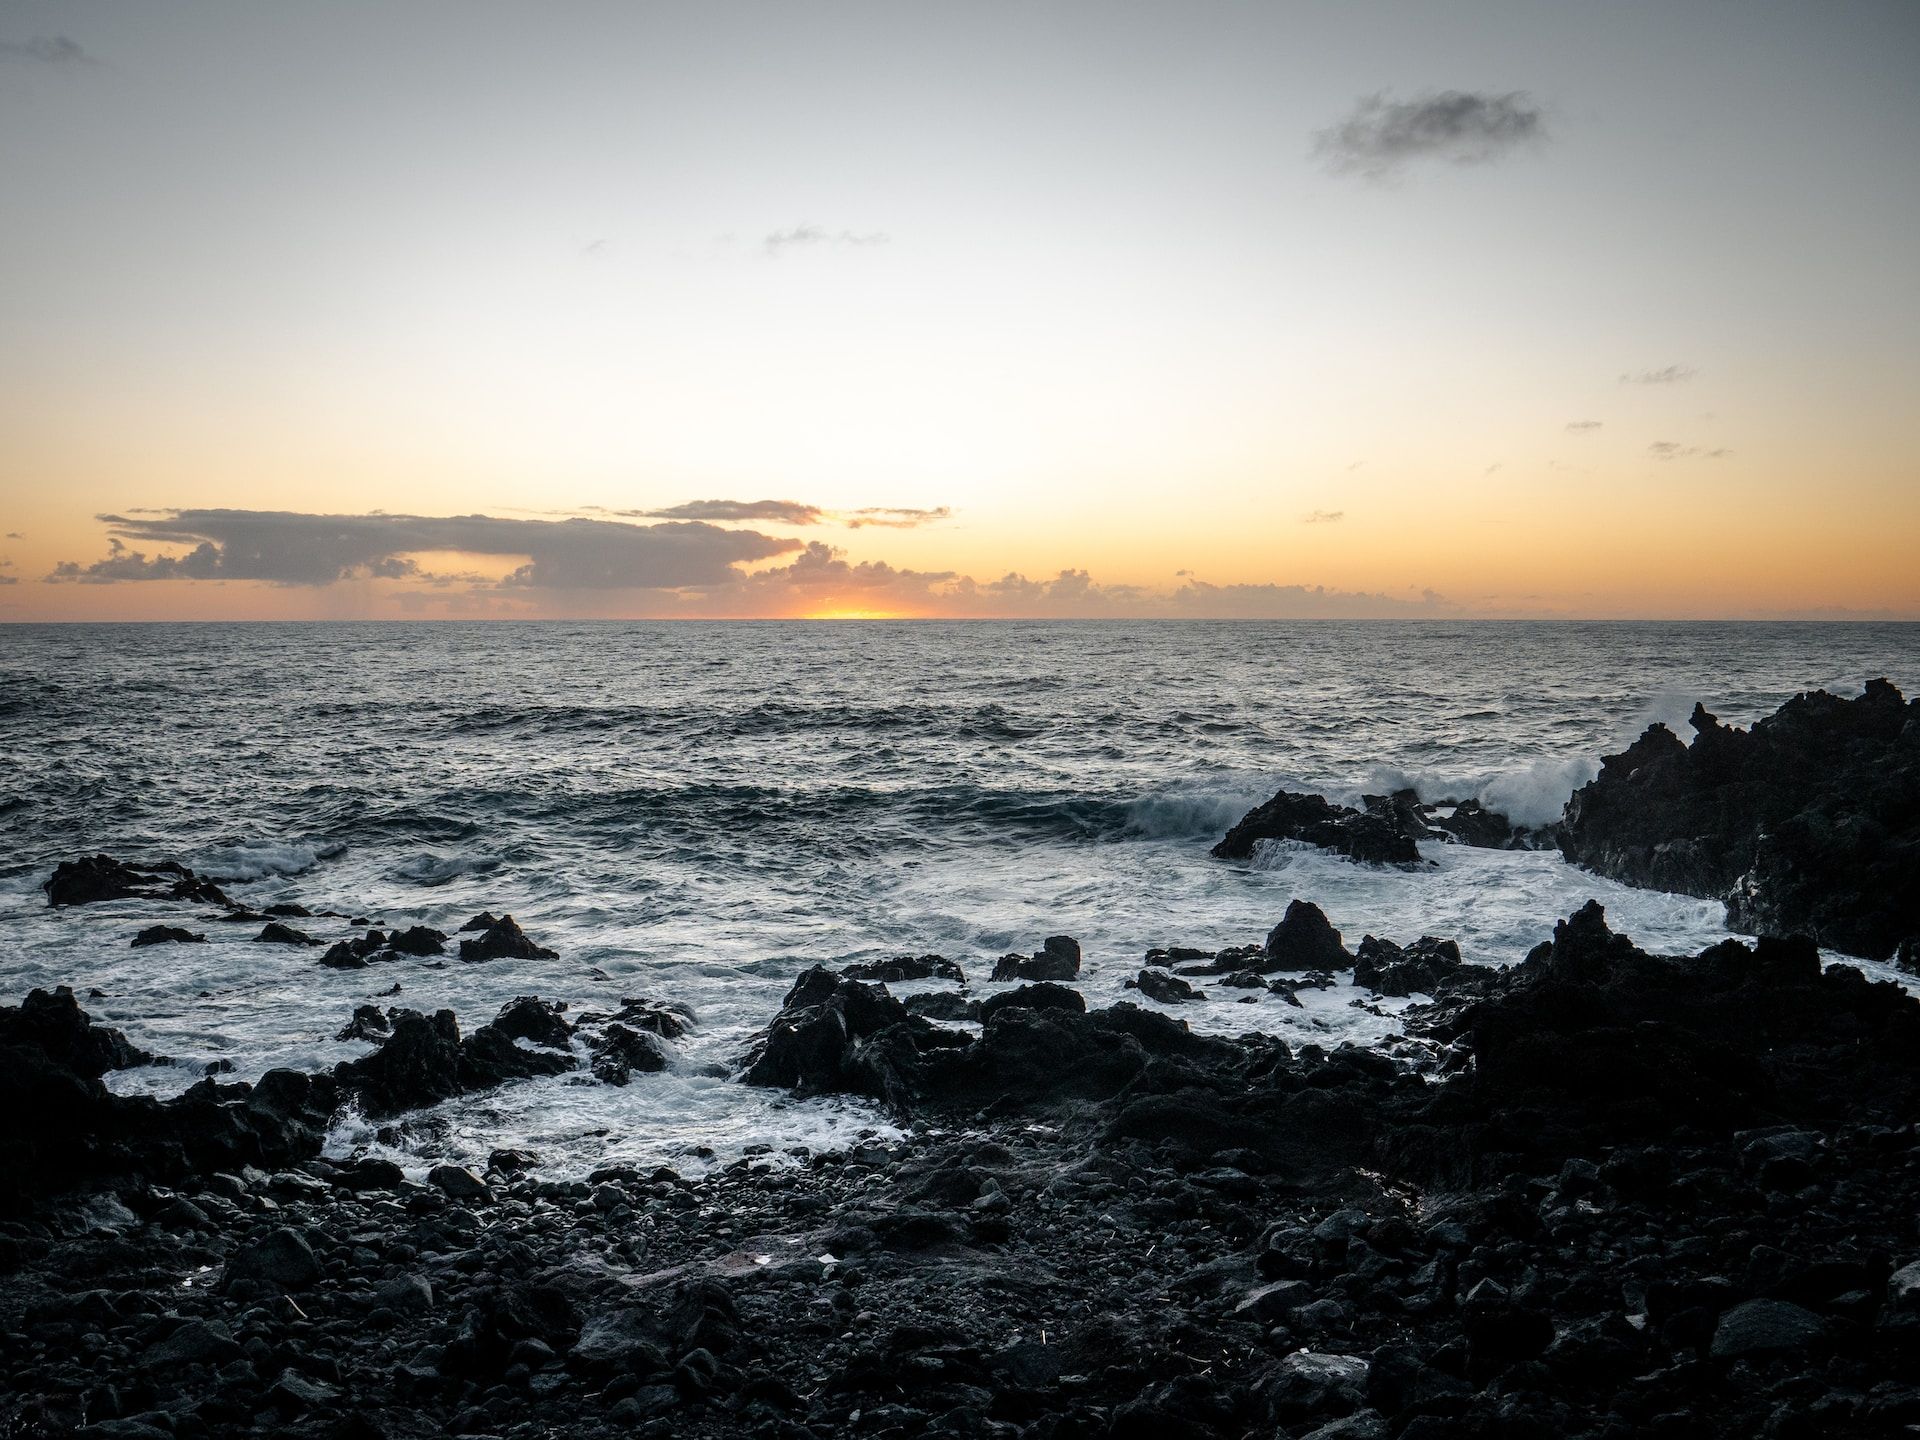 The ocean from Ponta Delgada